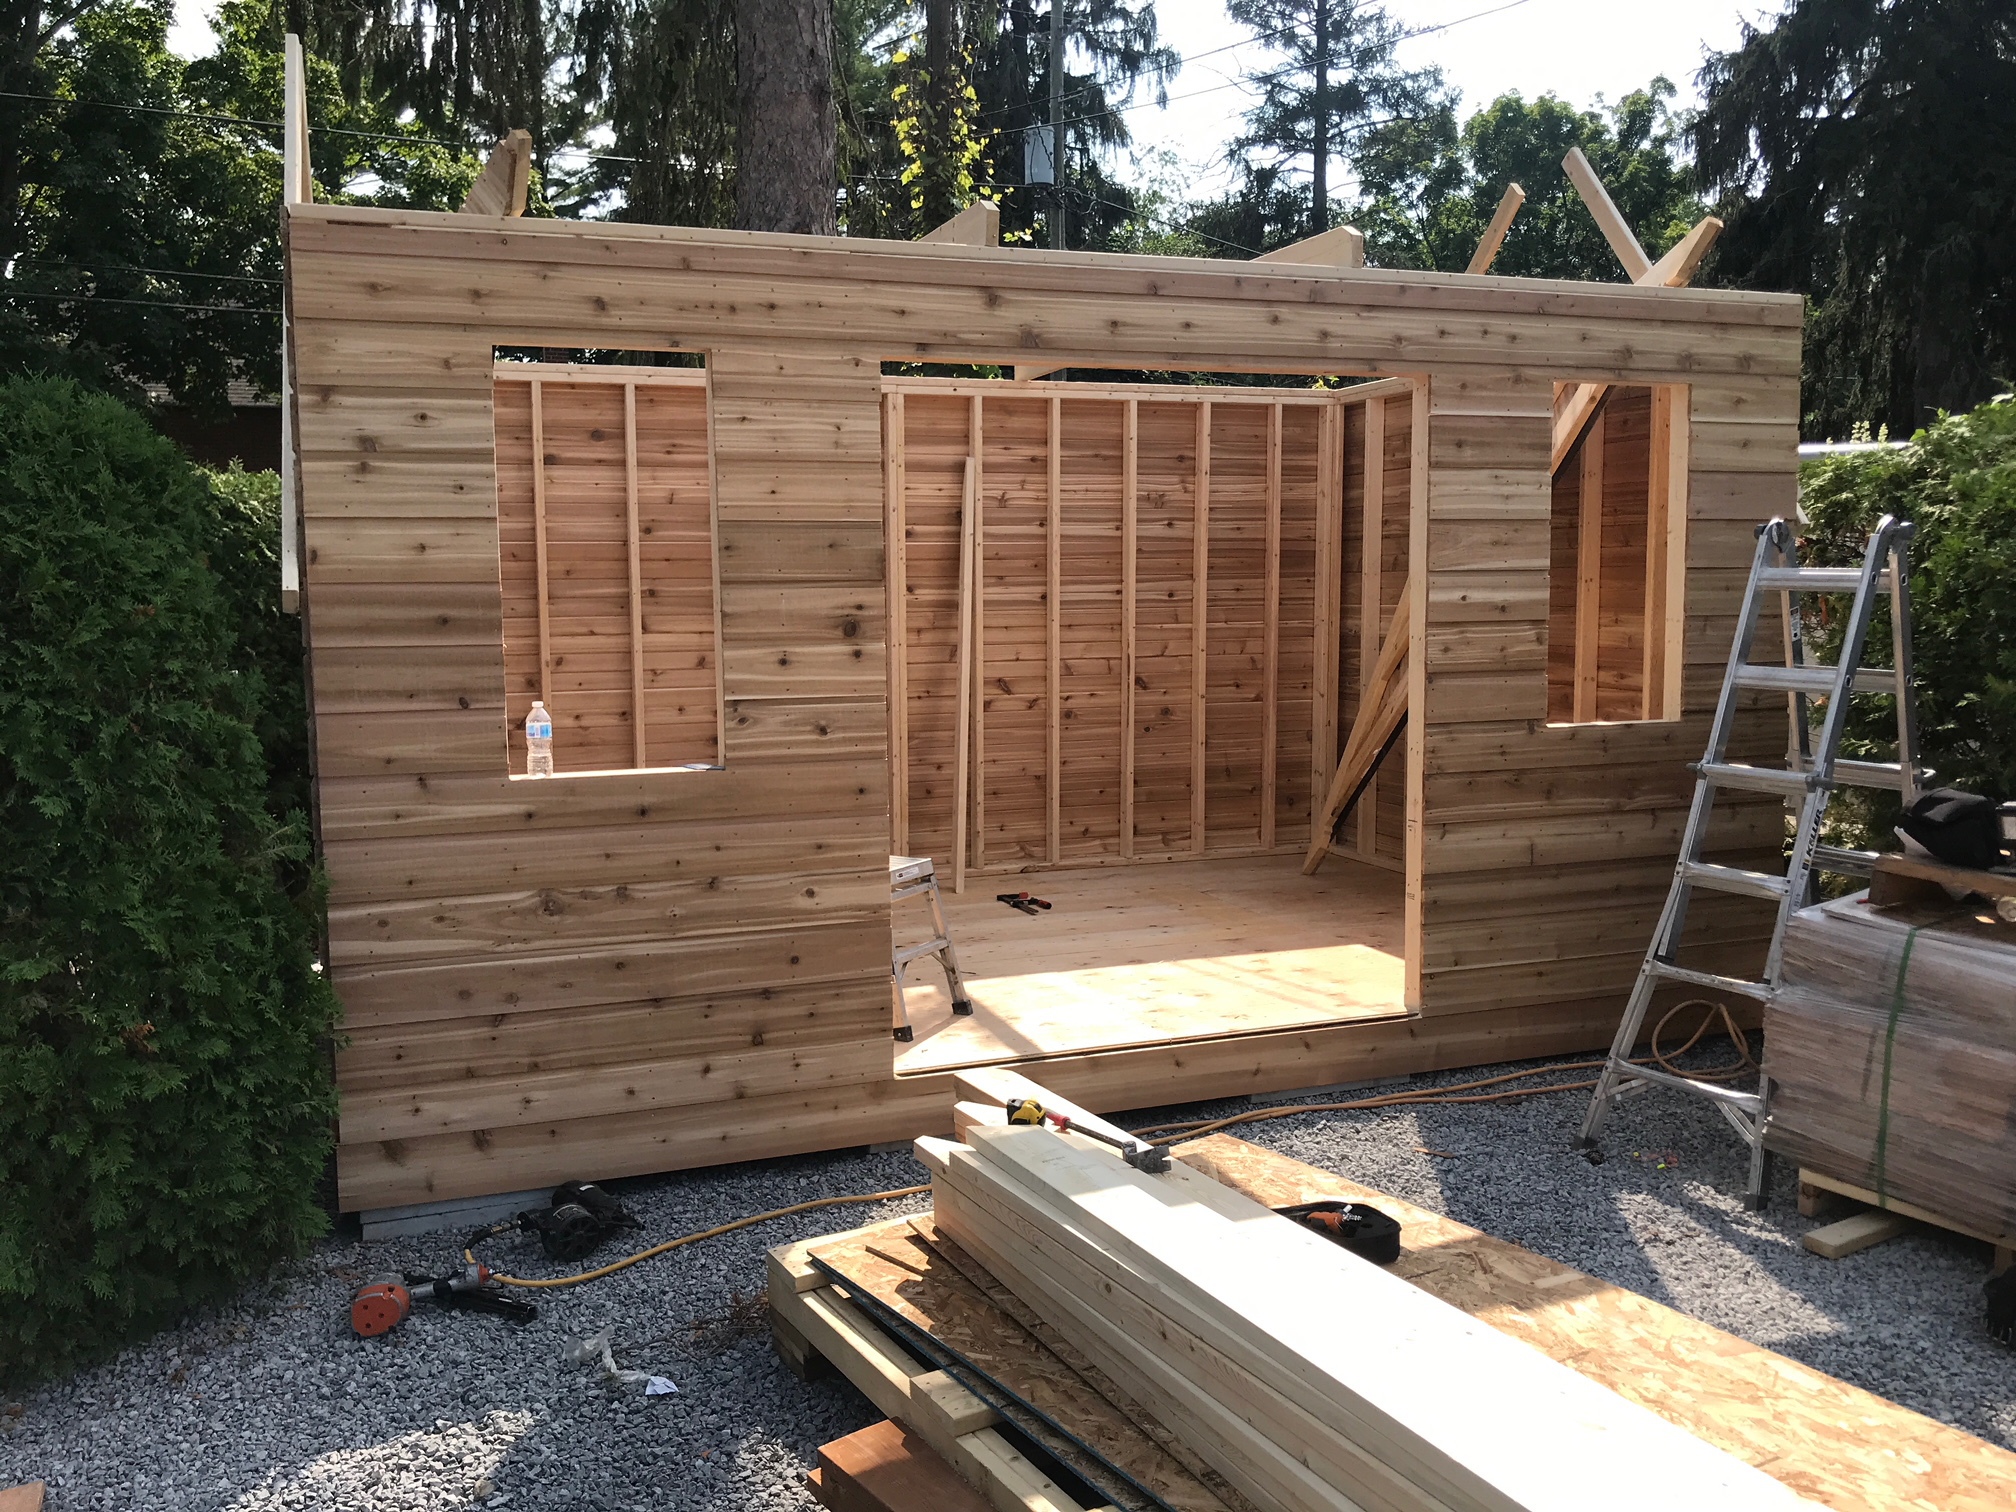 Cedar Palmerston 10x6 garden shed with double deluxe doors in Toronto Ontario. ID number 231493-4